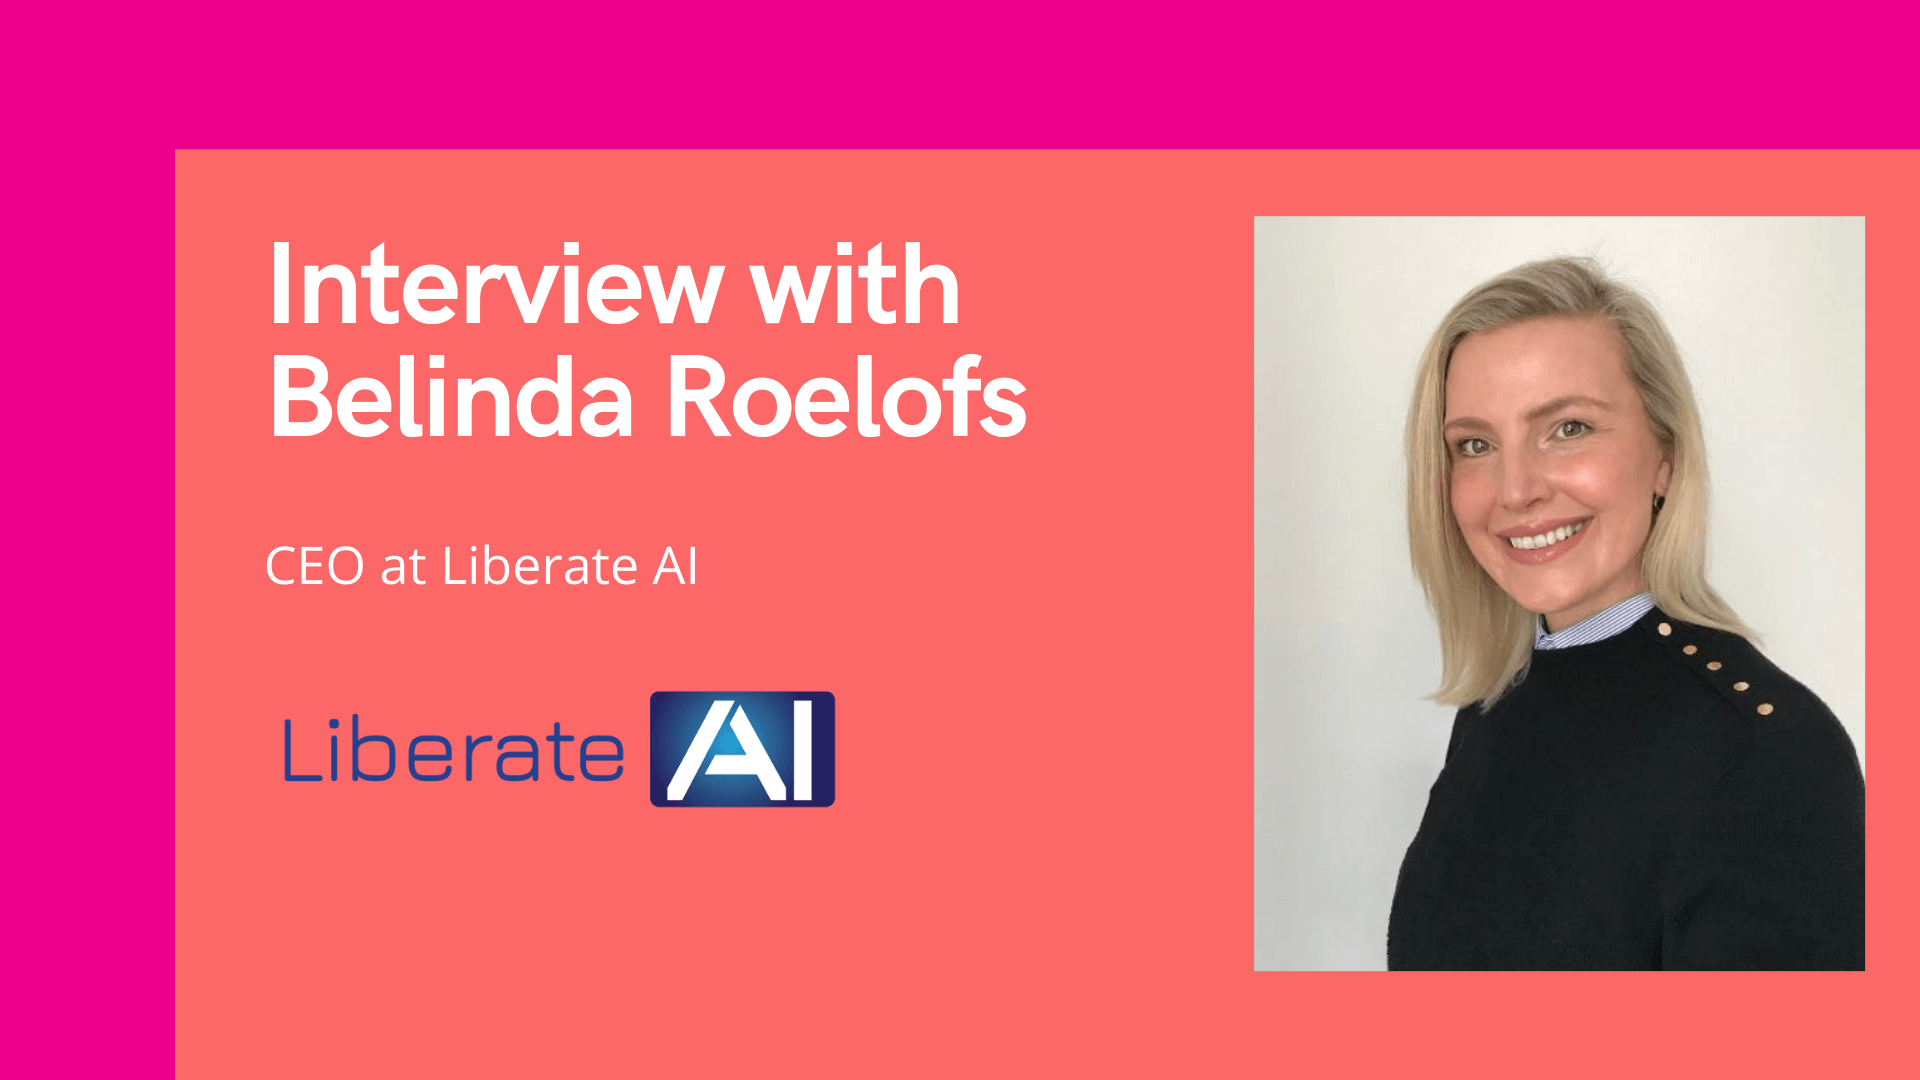 elinda Roelofs, CEO at Liberate